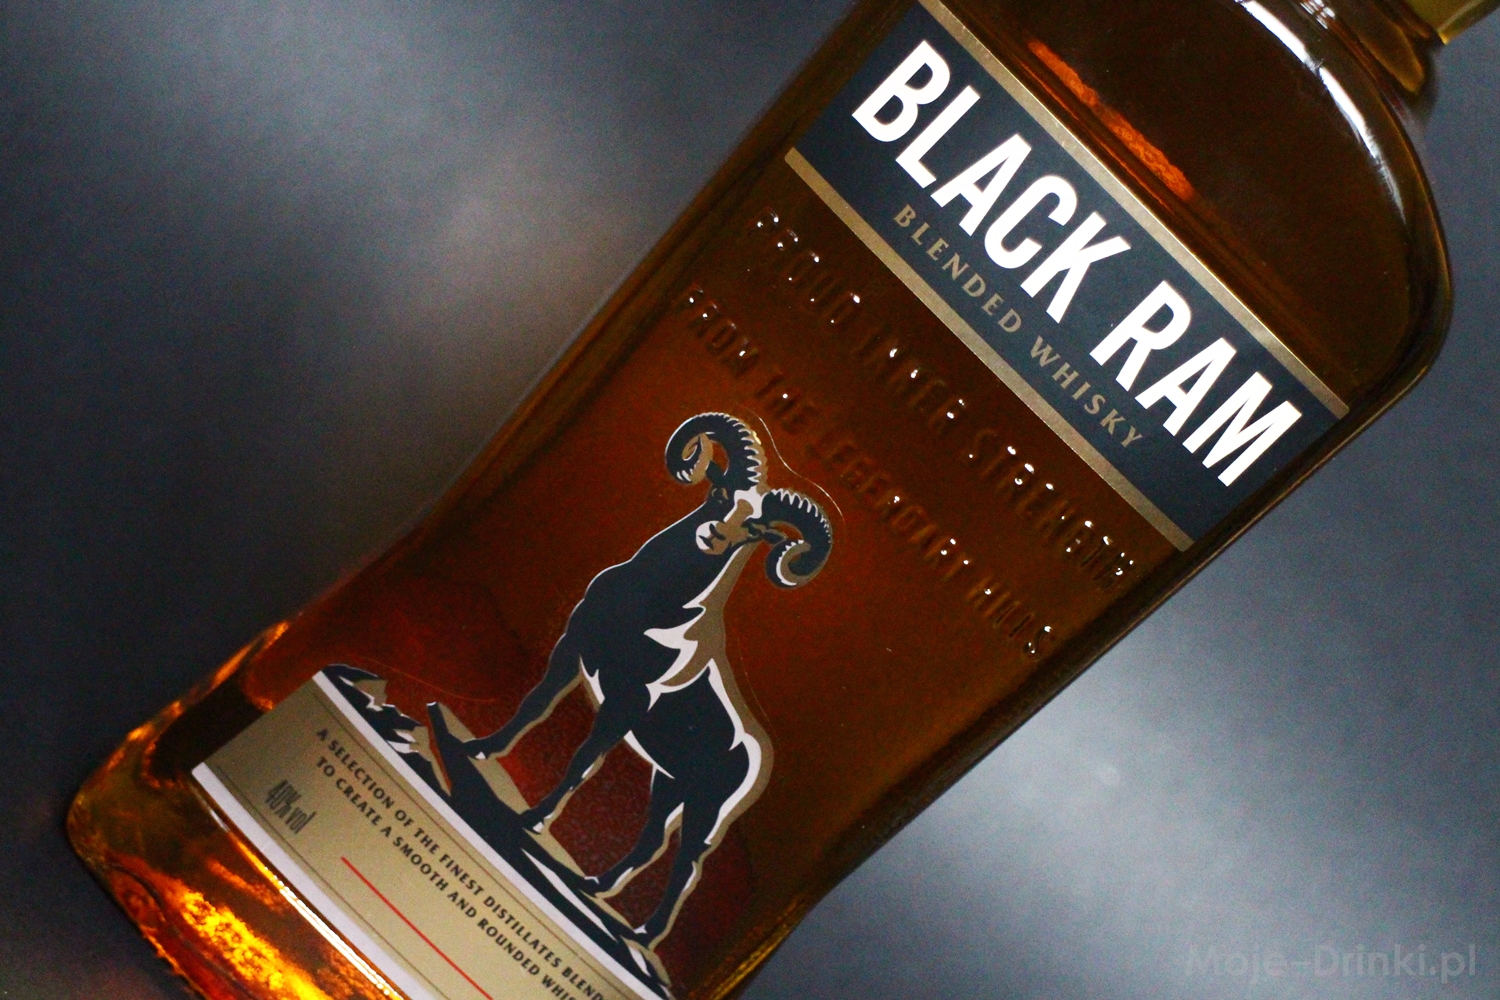 Butelka Wieczoru 43 Black Ram Blended Whisky Moje Drinki Pl